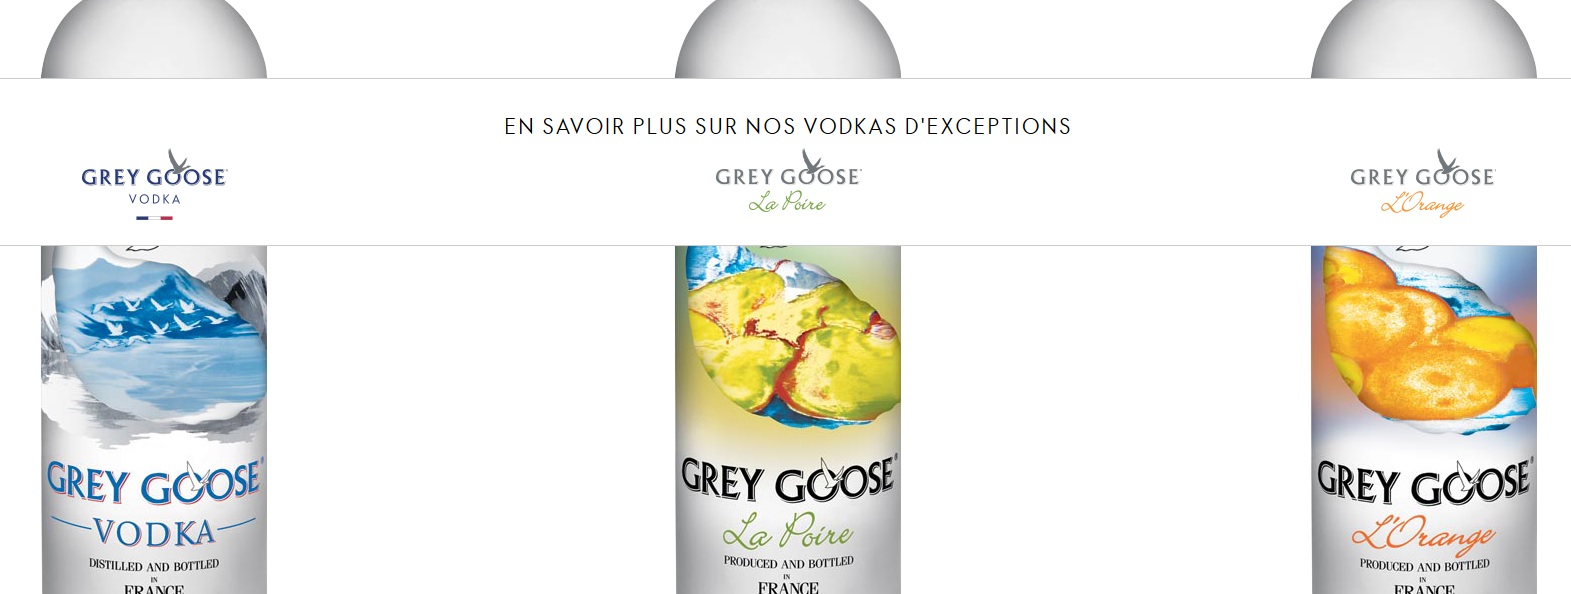 gamme de vodka Grey Goose